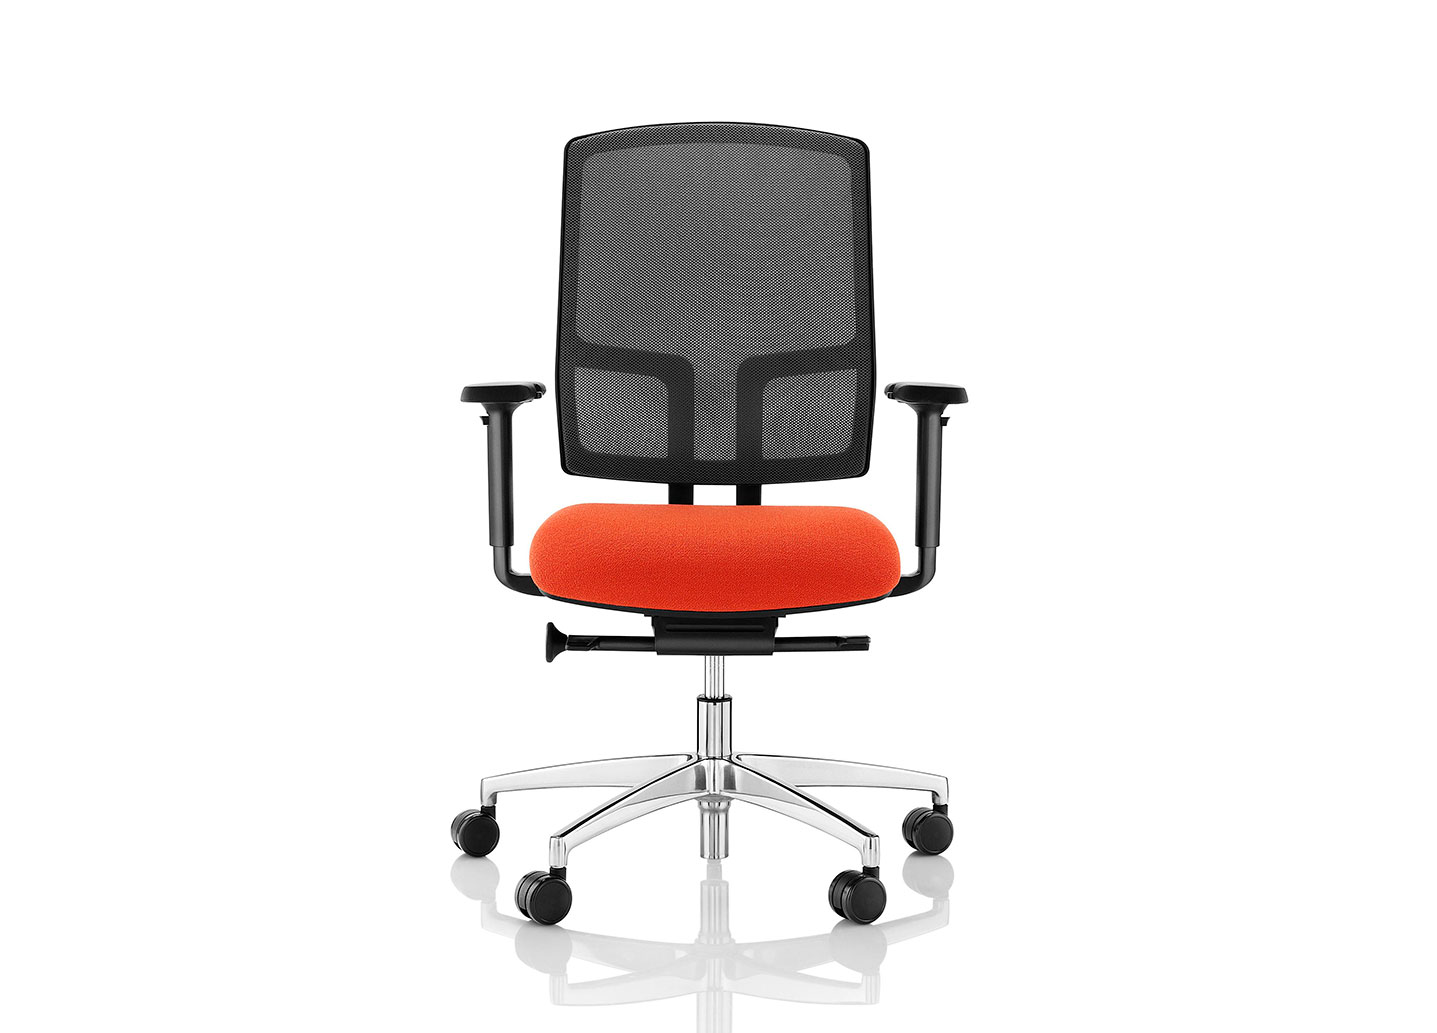 Komac Felix chair by Boss